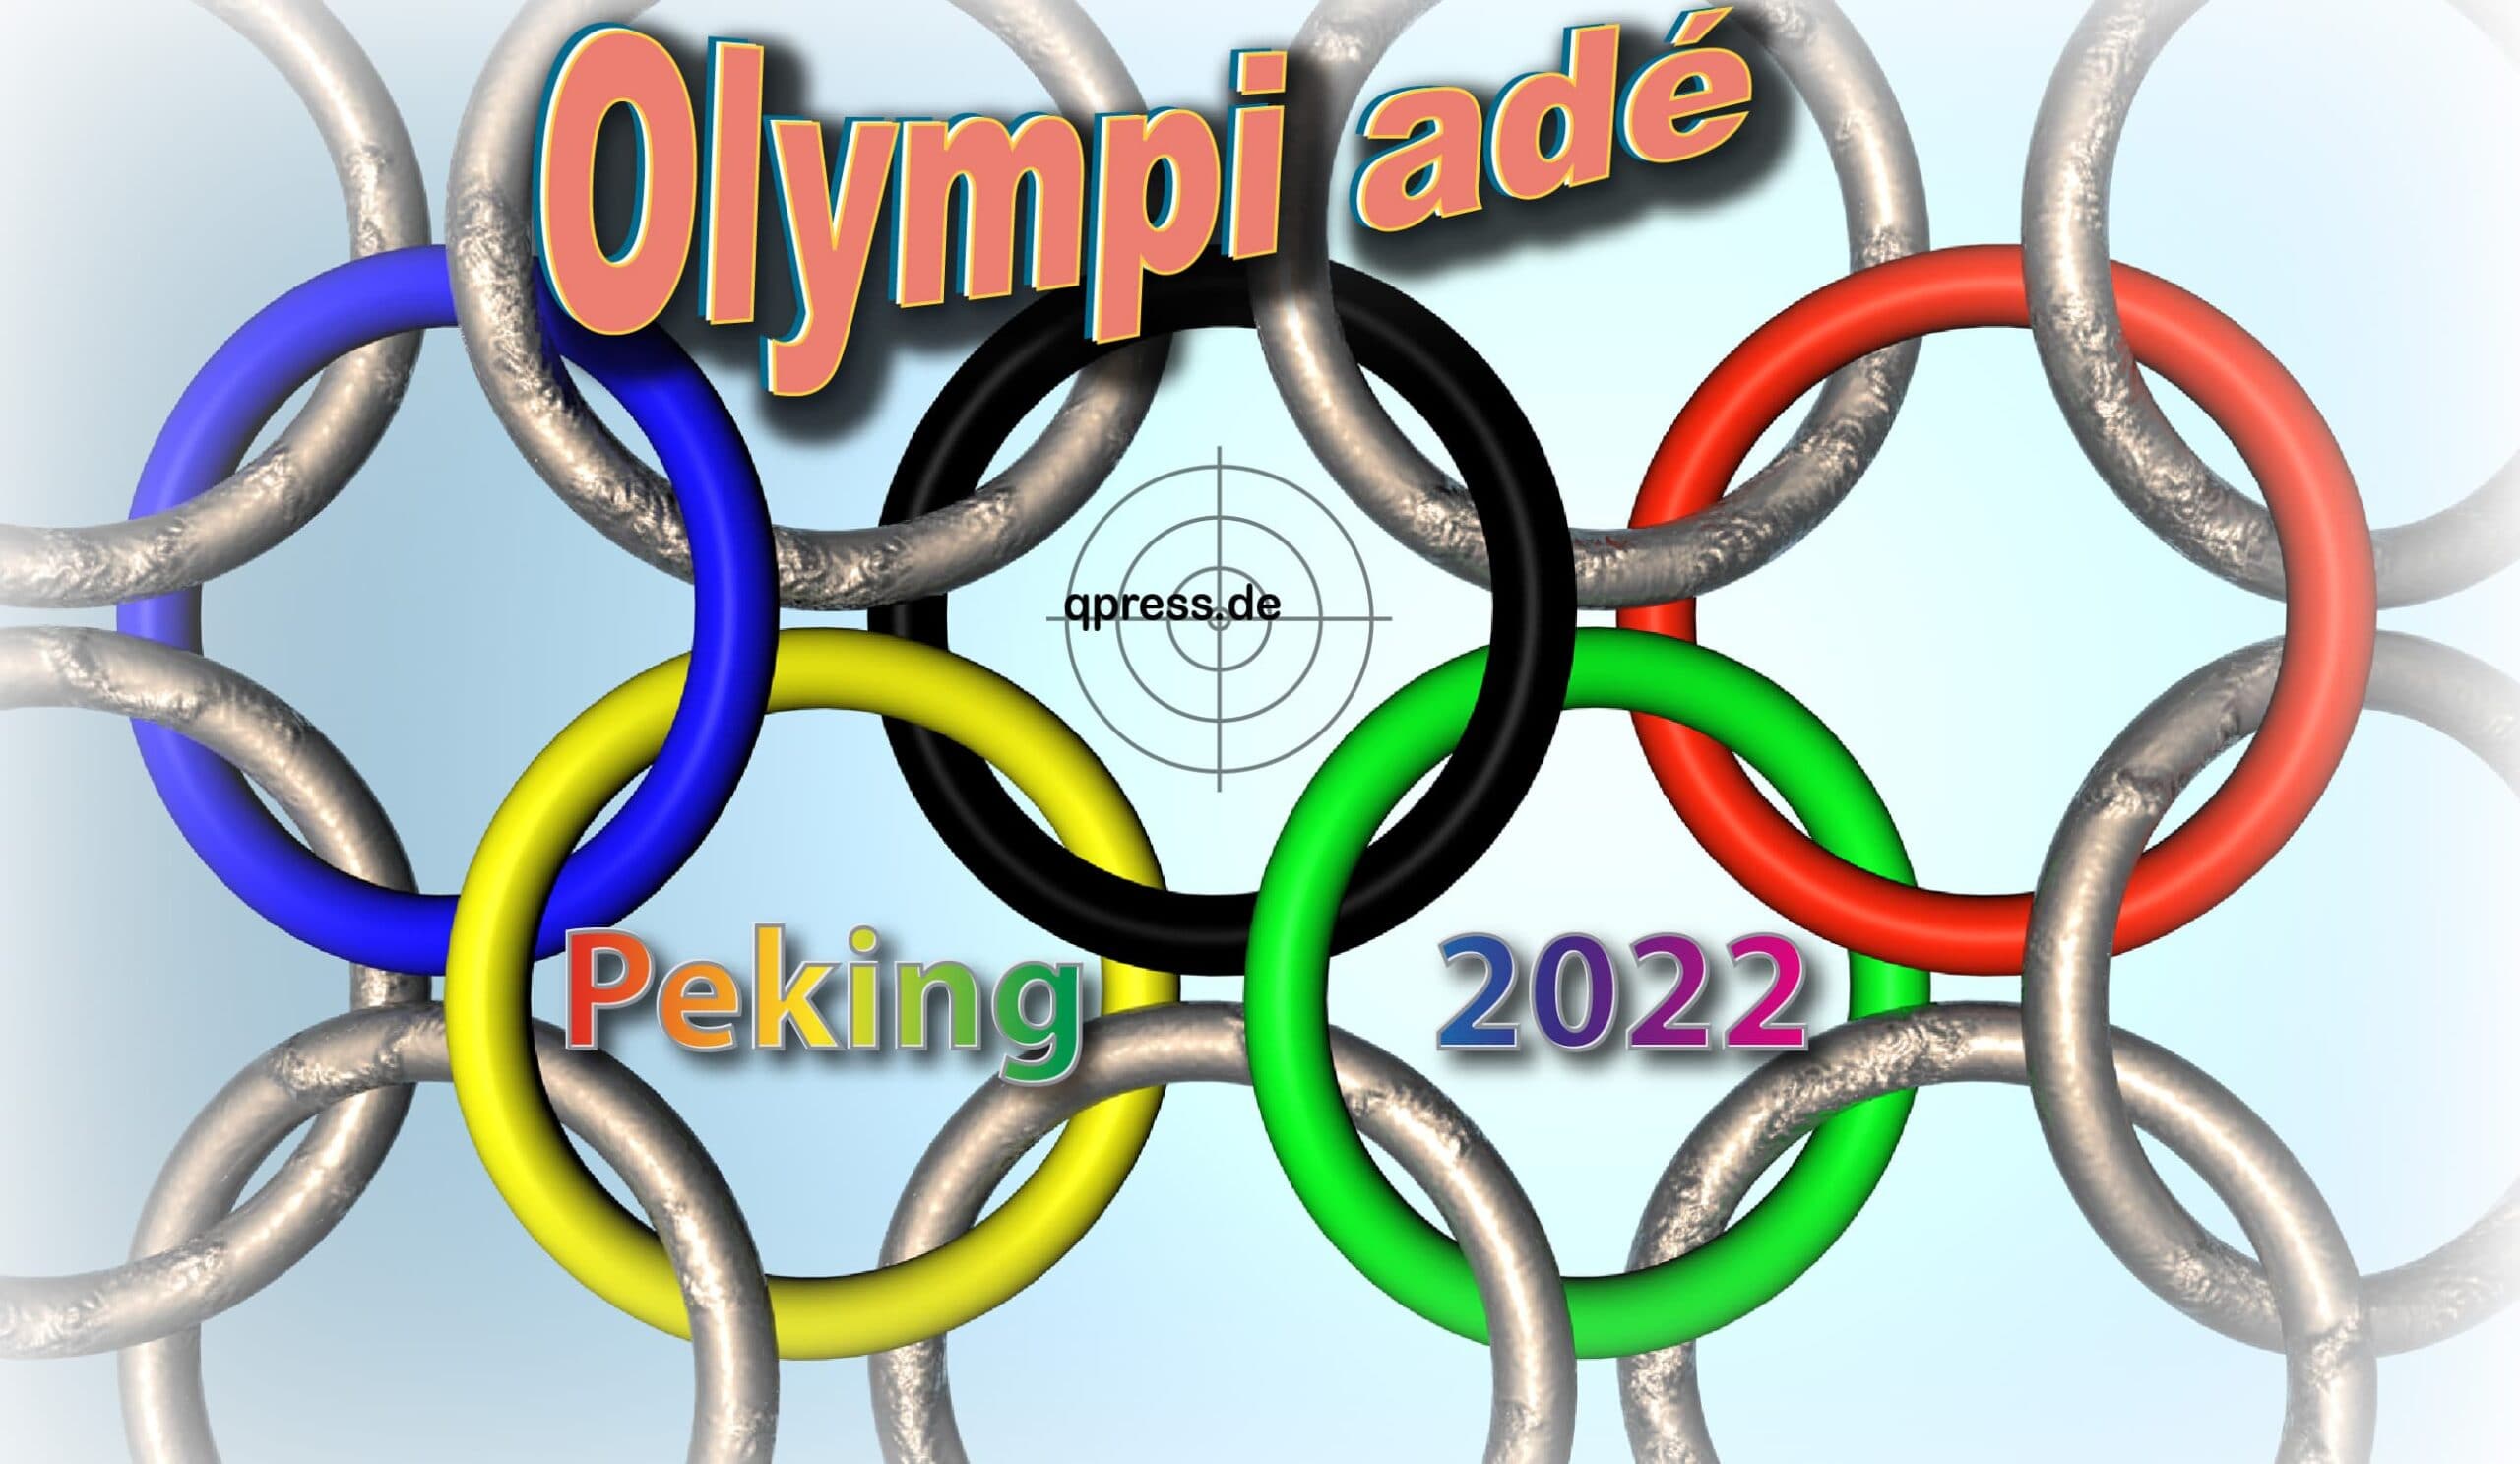 Olympi ade Peking china 2022-qpress